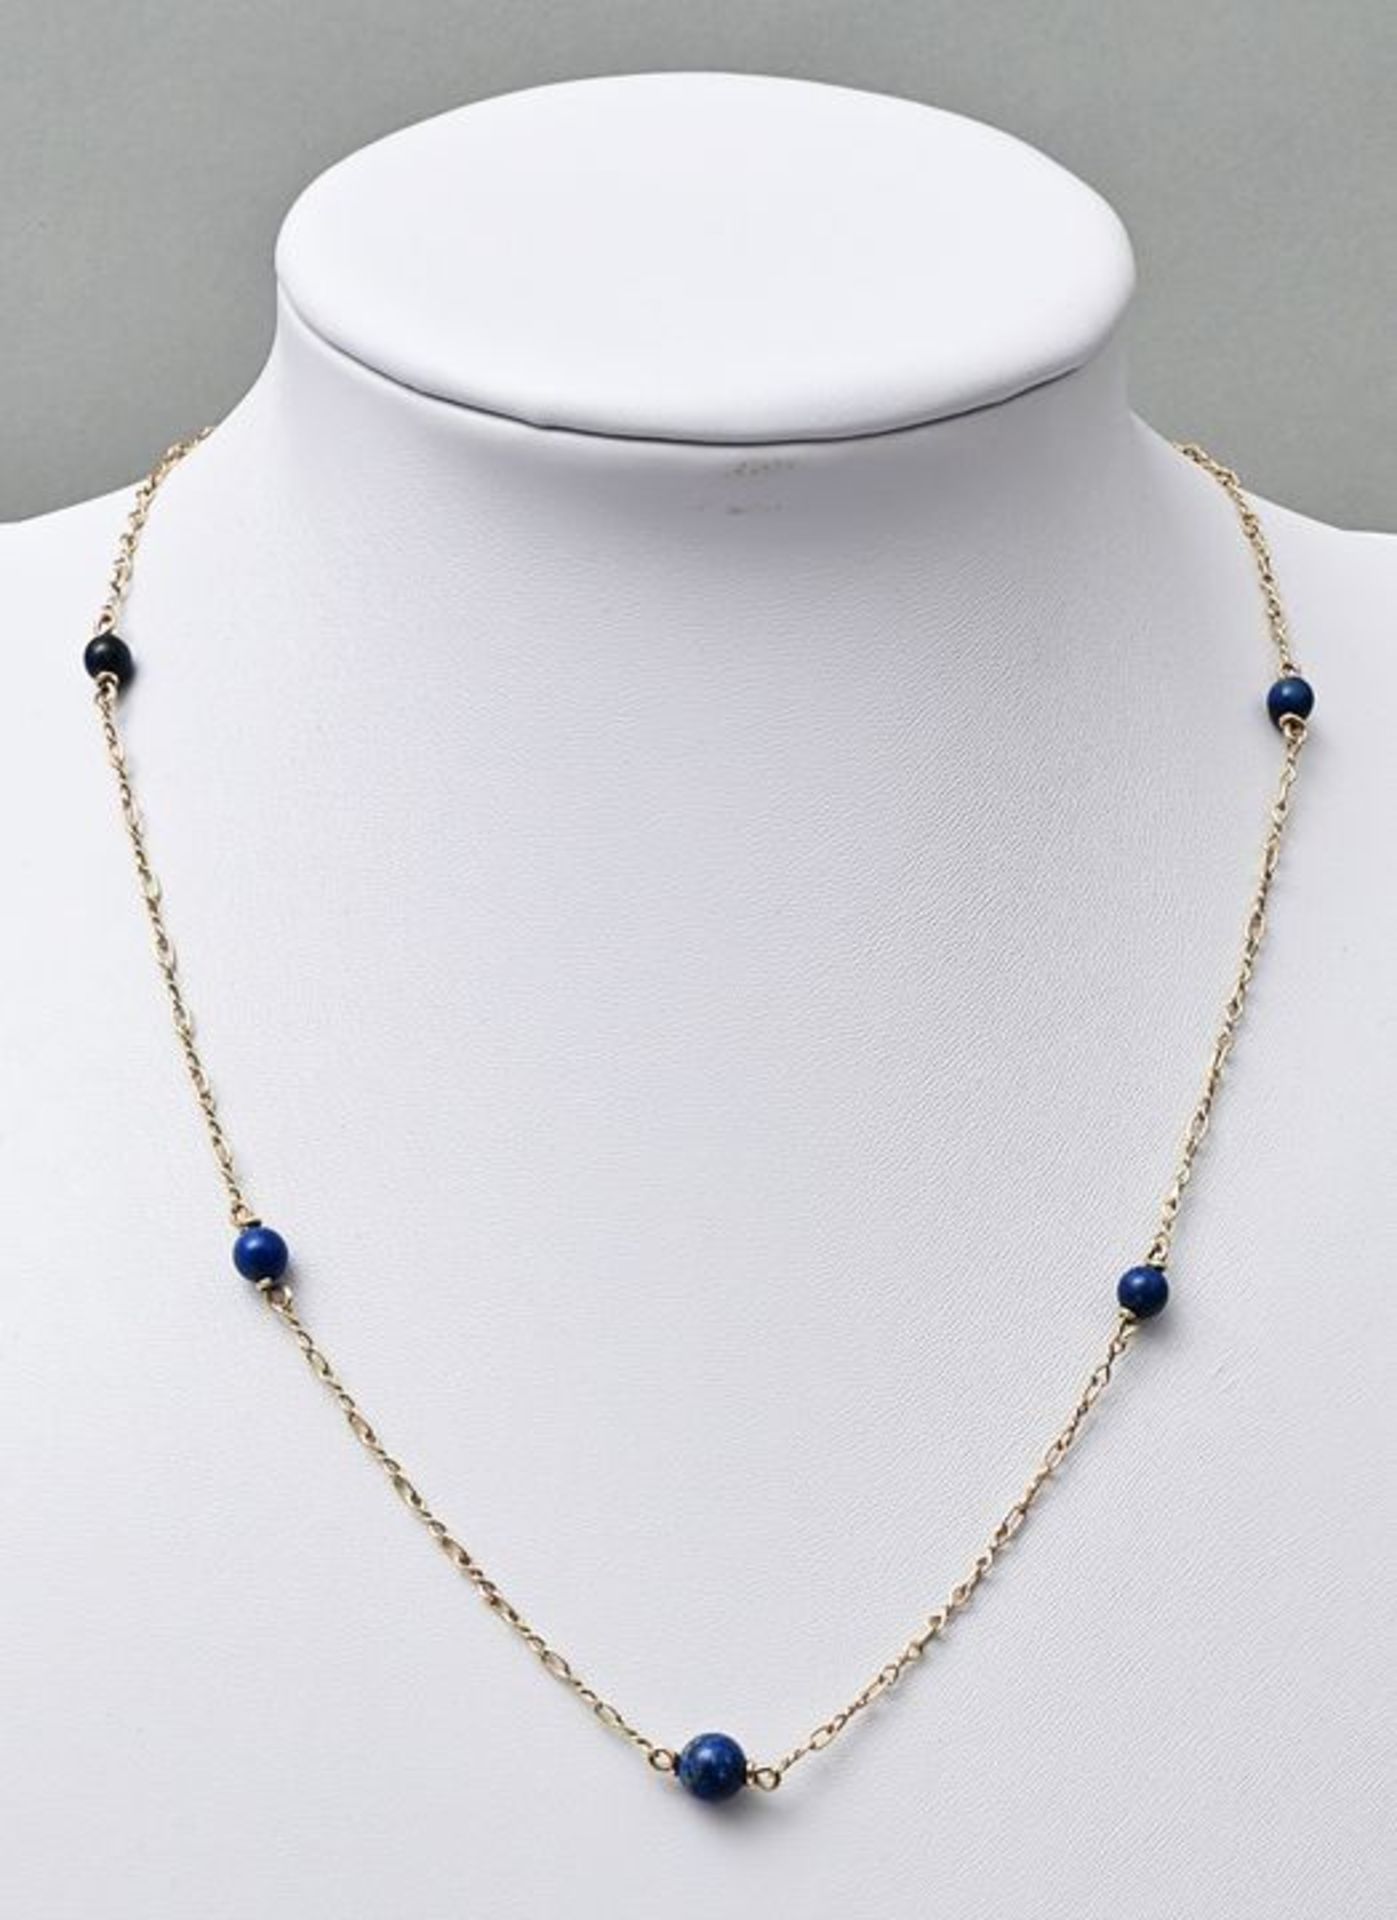 Goldkette mit Lapislazuliperlen / Gold necklace with lapis lazuli pearls